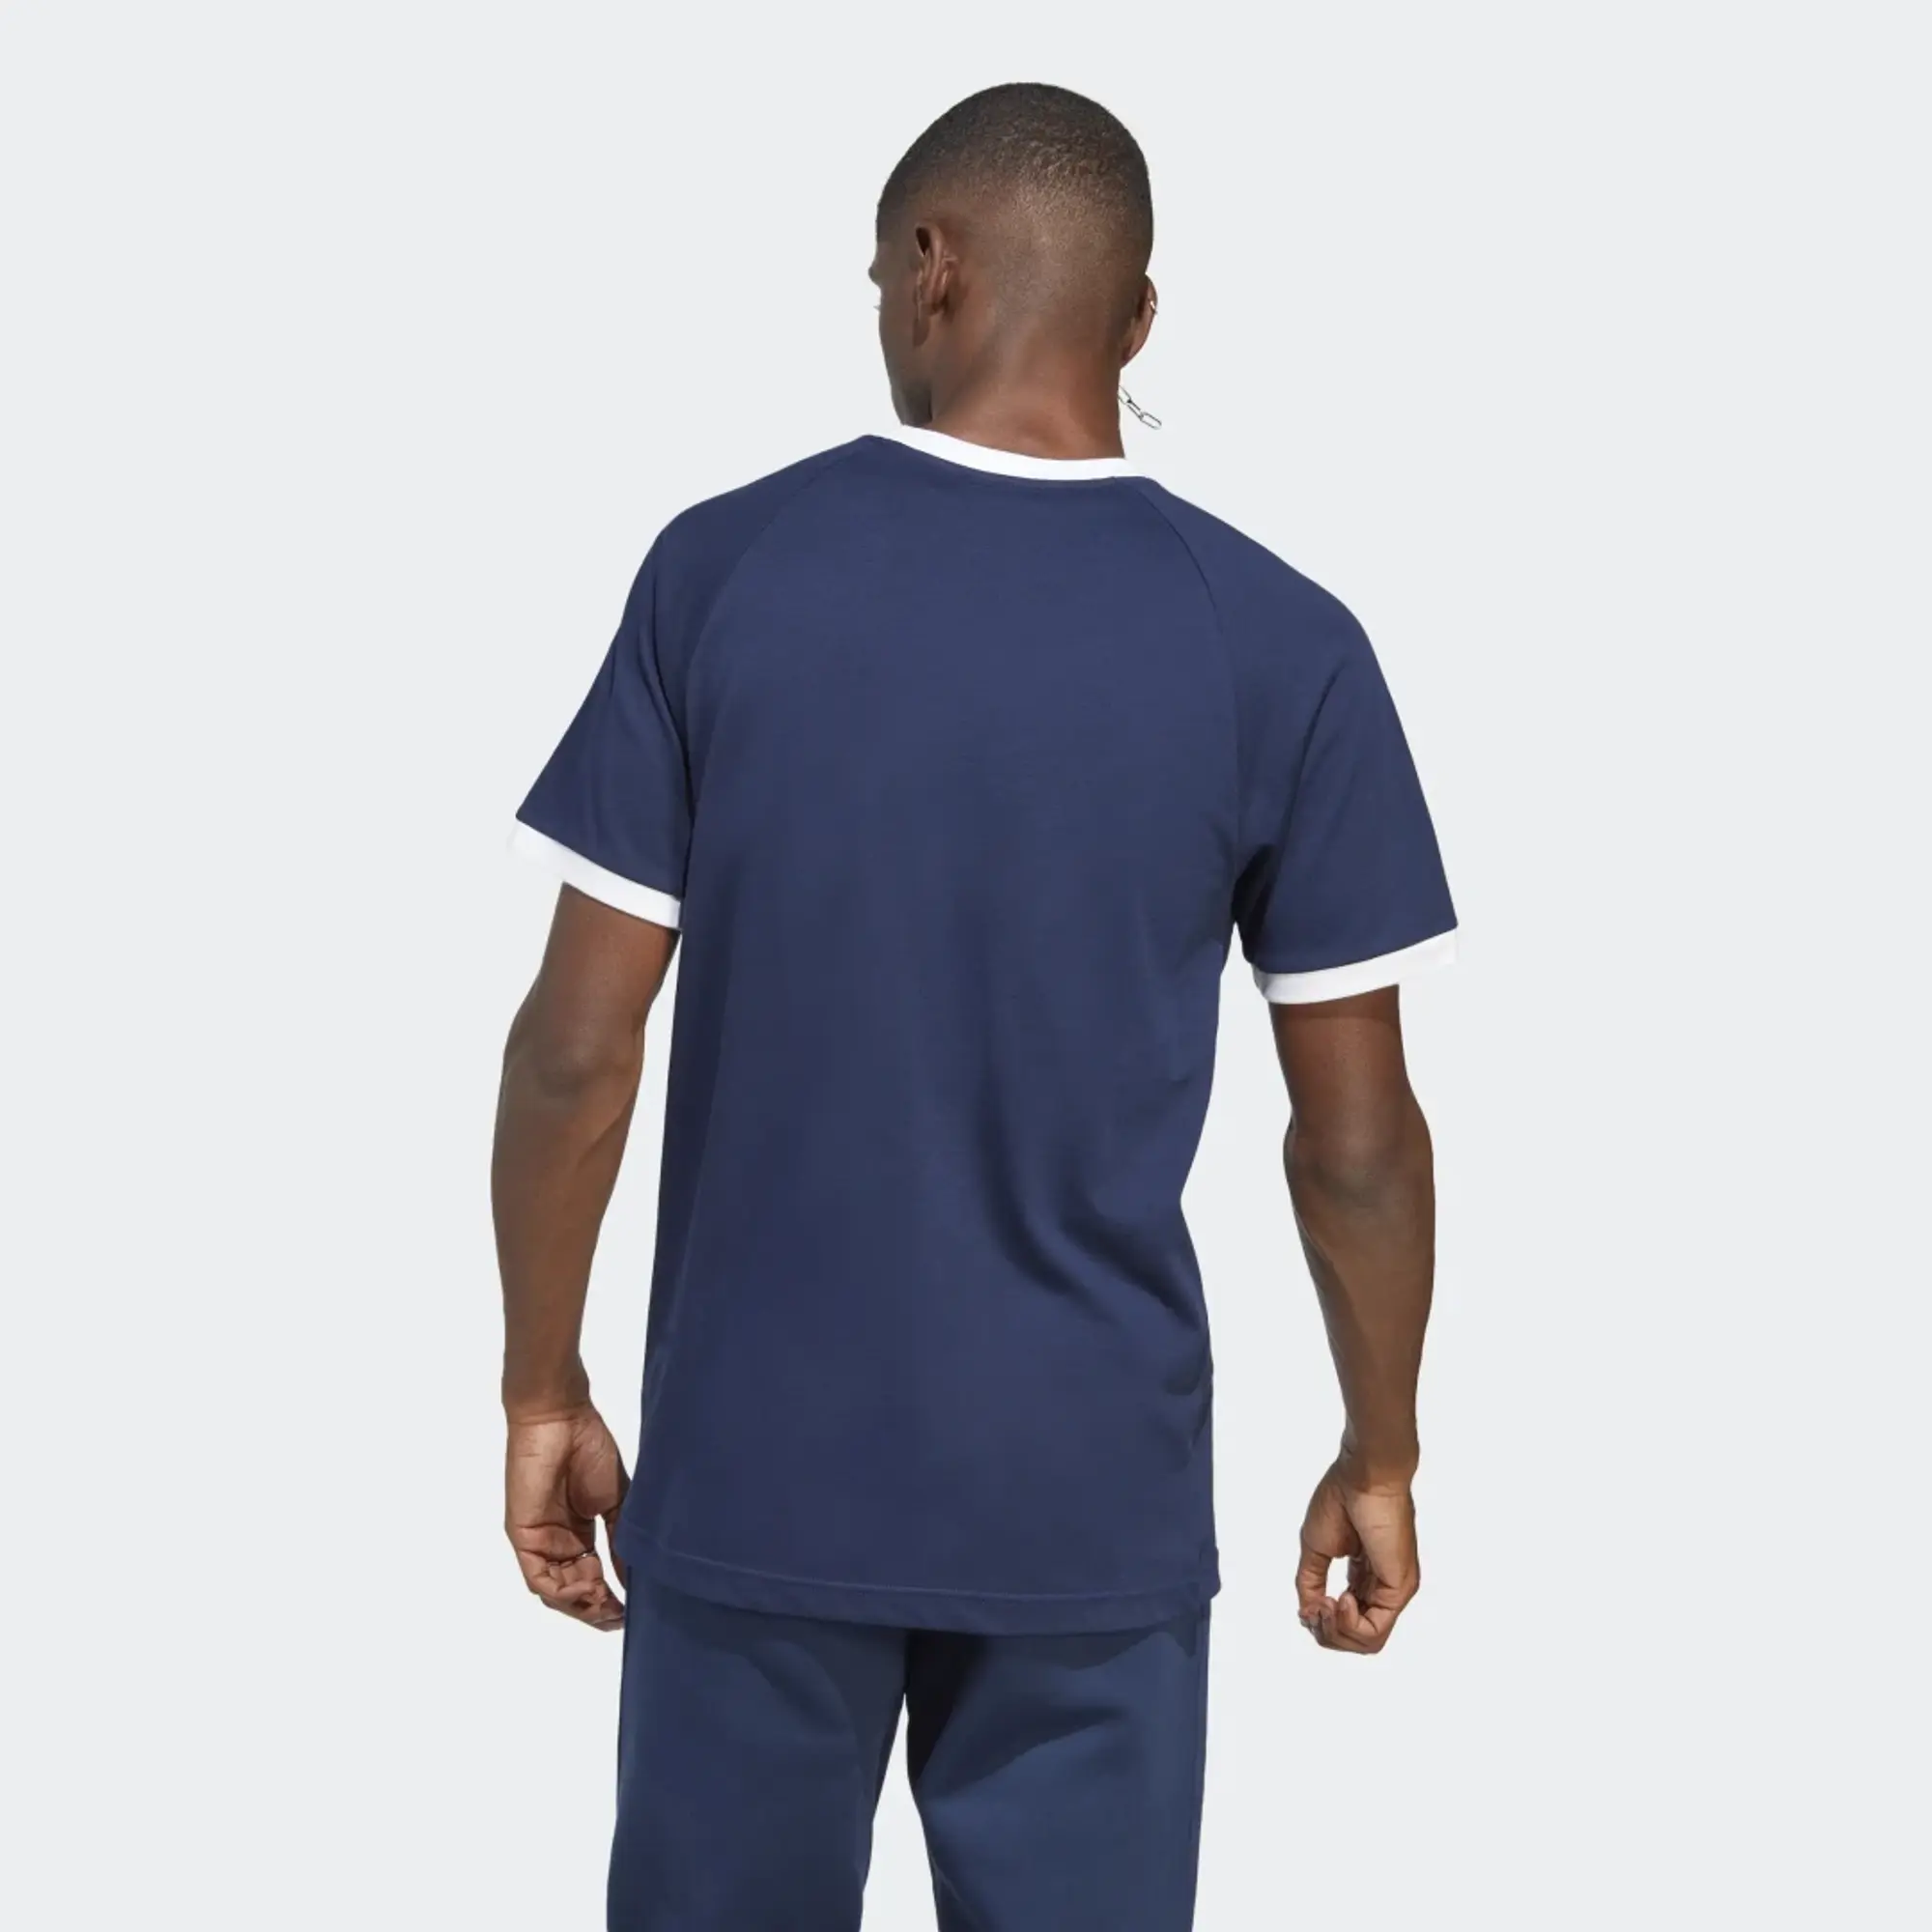 adidas Originals Men's 3-Stripes T-Shirt - Navy, Navy